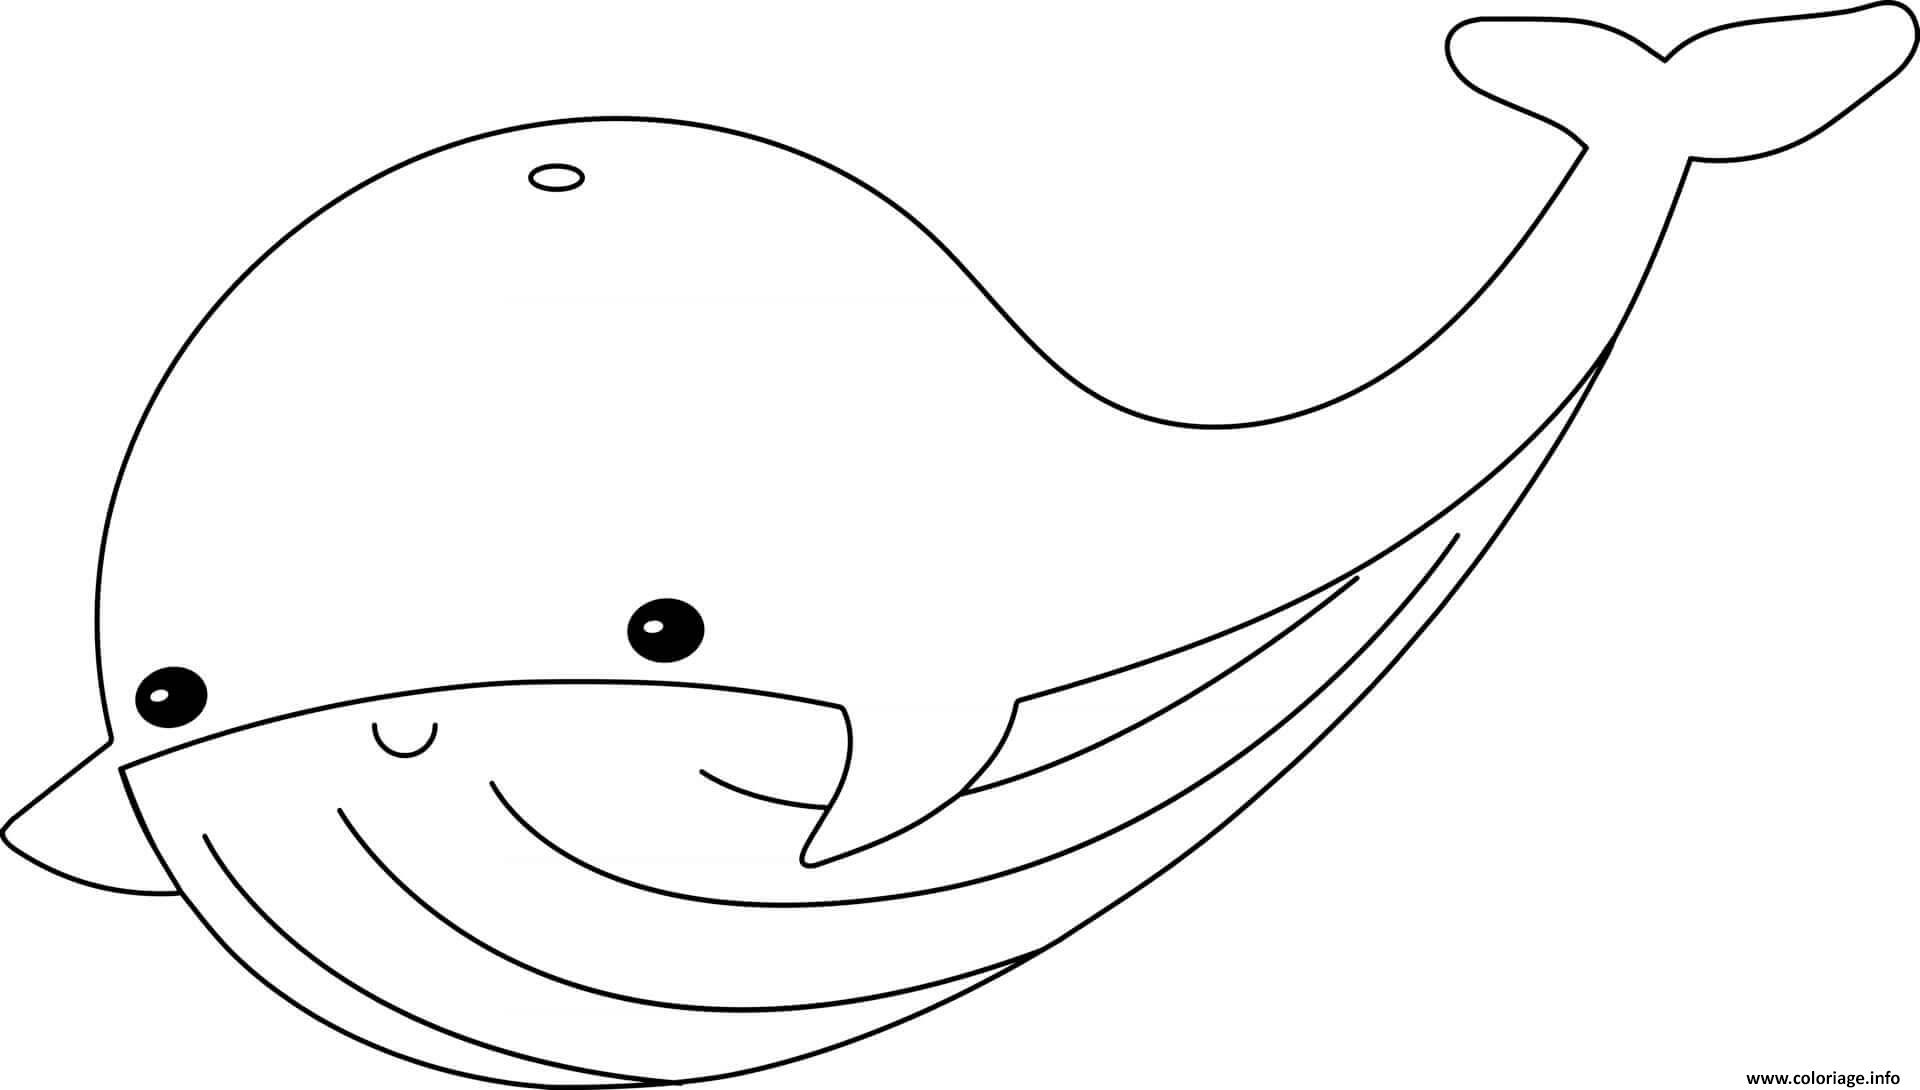 Dessin baleine animal marin mignon Coloriage Gratuit à Imprimer